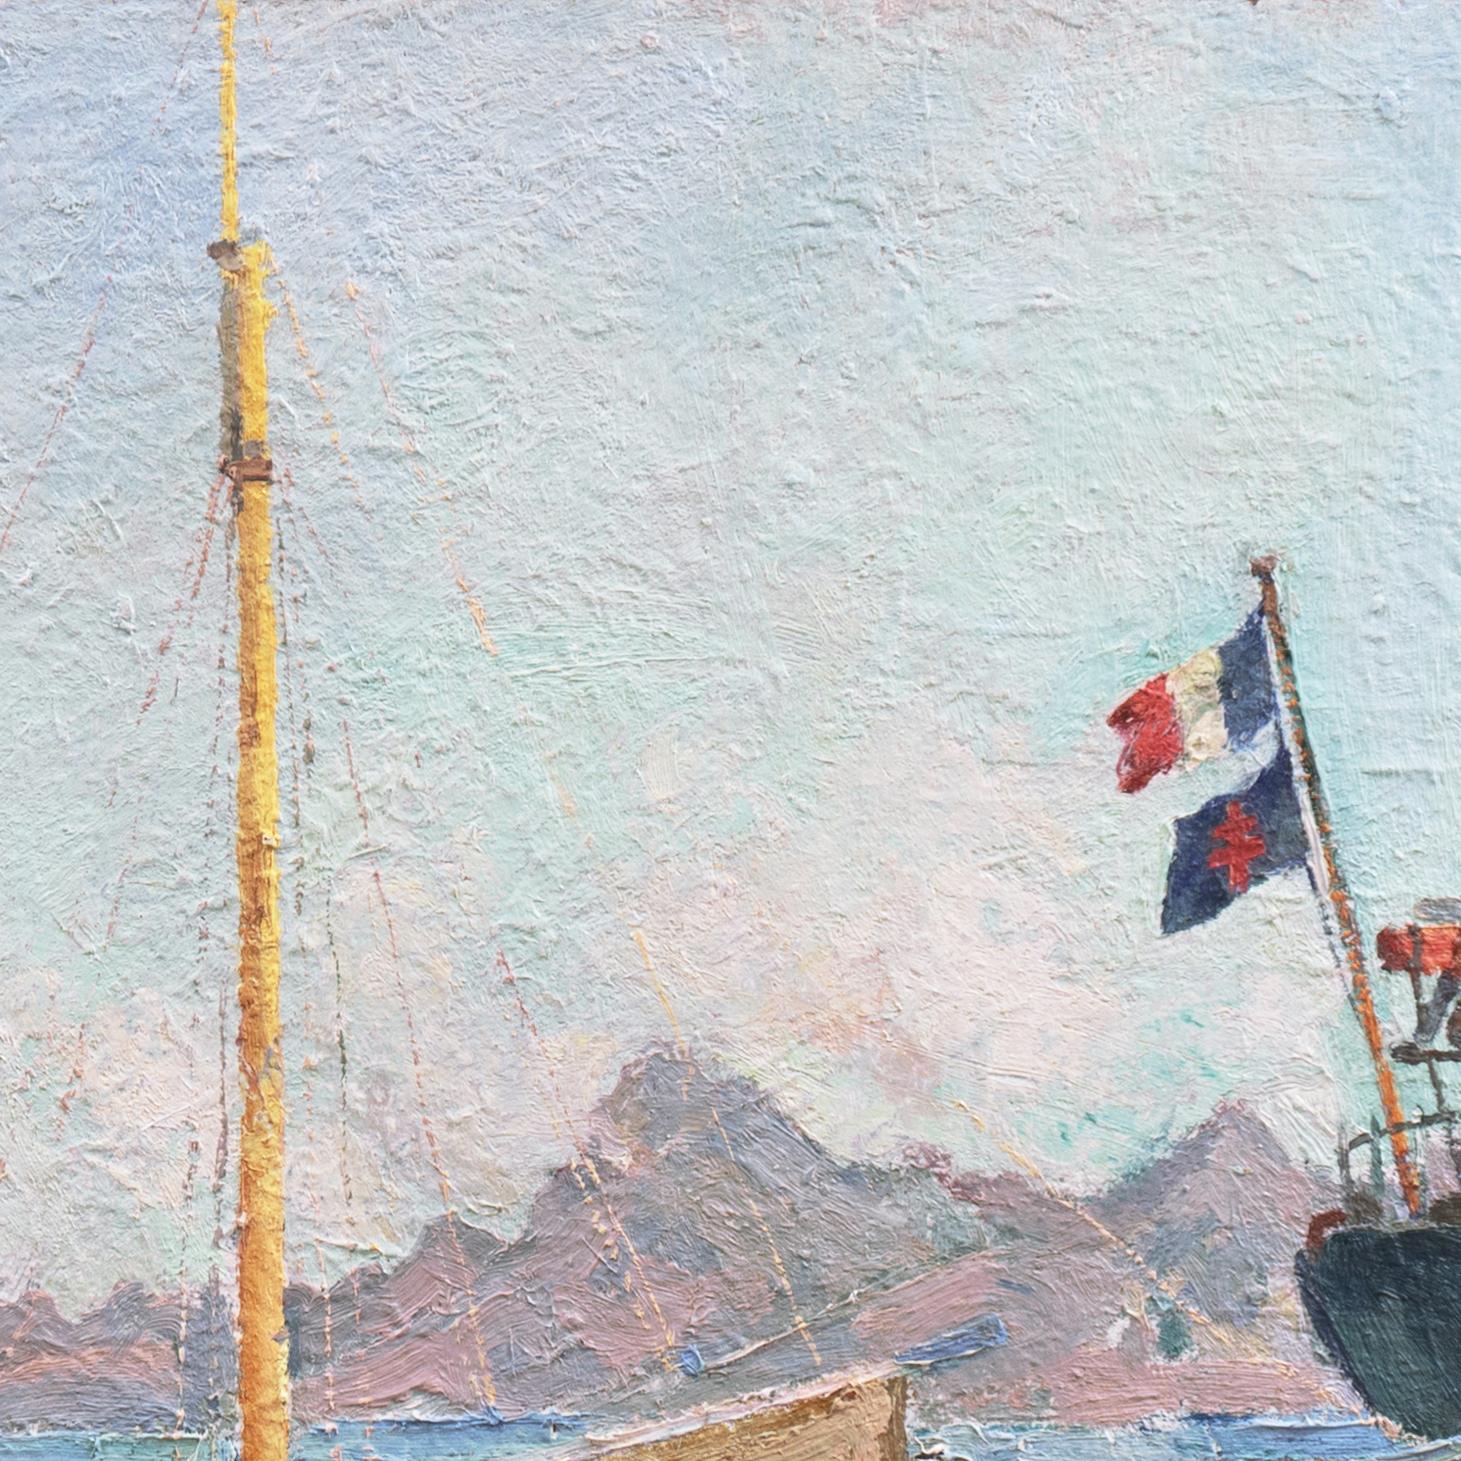 'Moorea', Paris Salon, Tahiti, Polynesia, South Seas, Tricolor, French Flag, Oil - Post-Impressionist Painting by Jean Masson